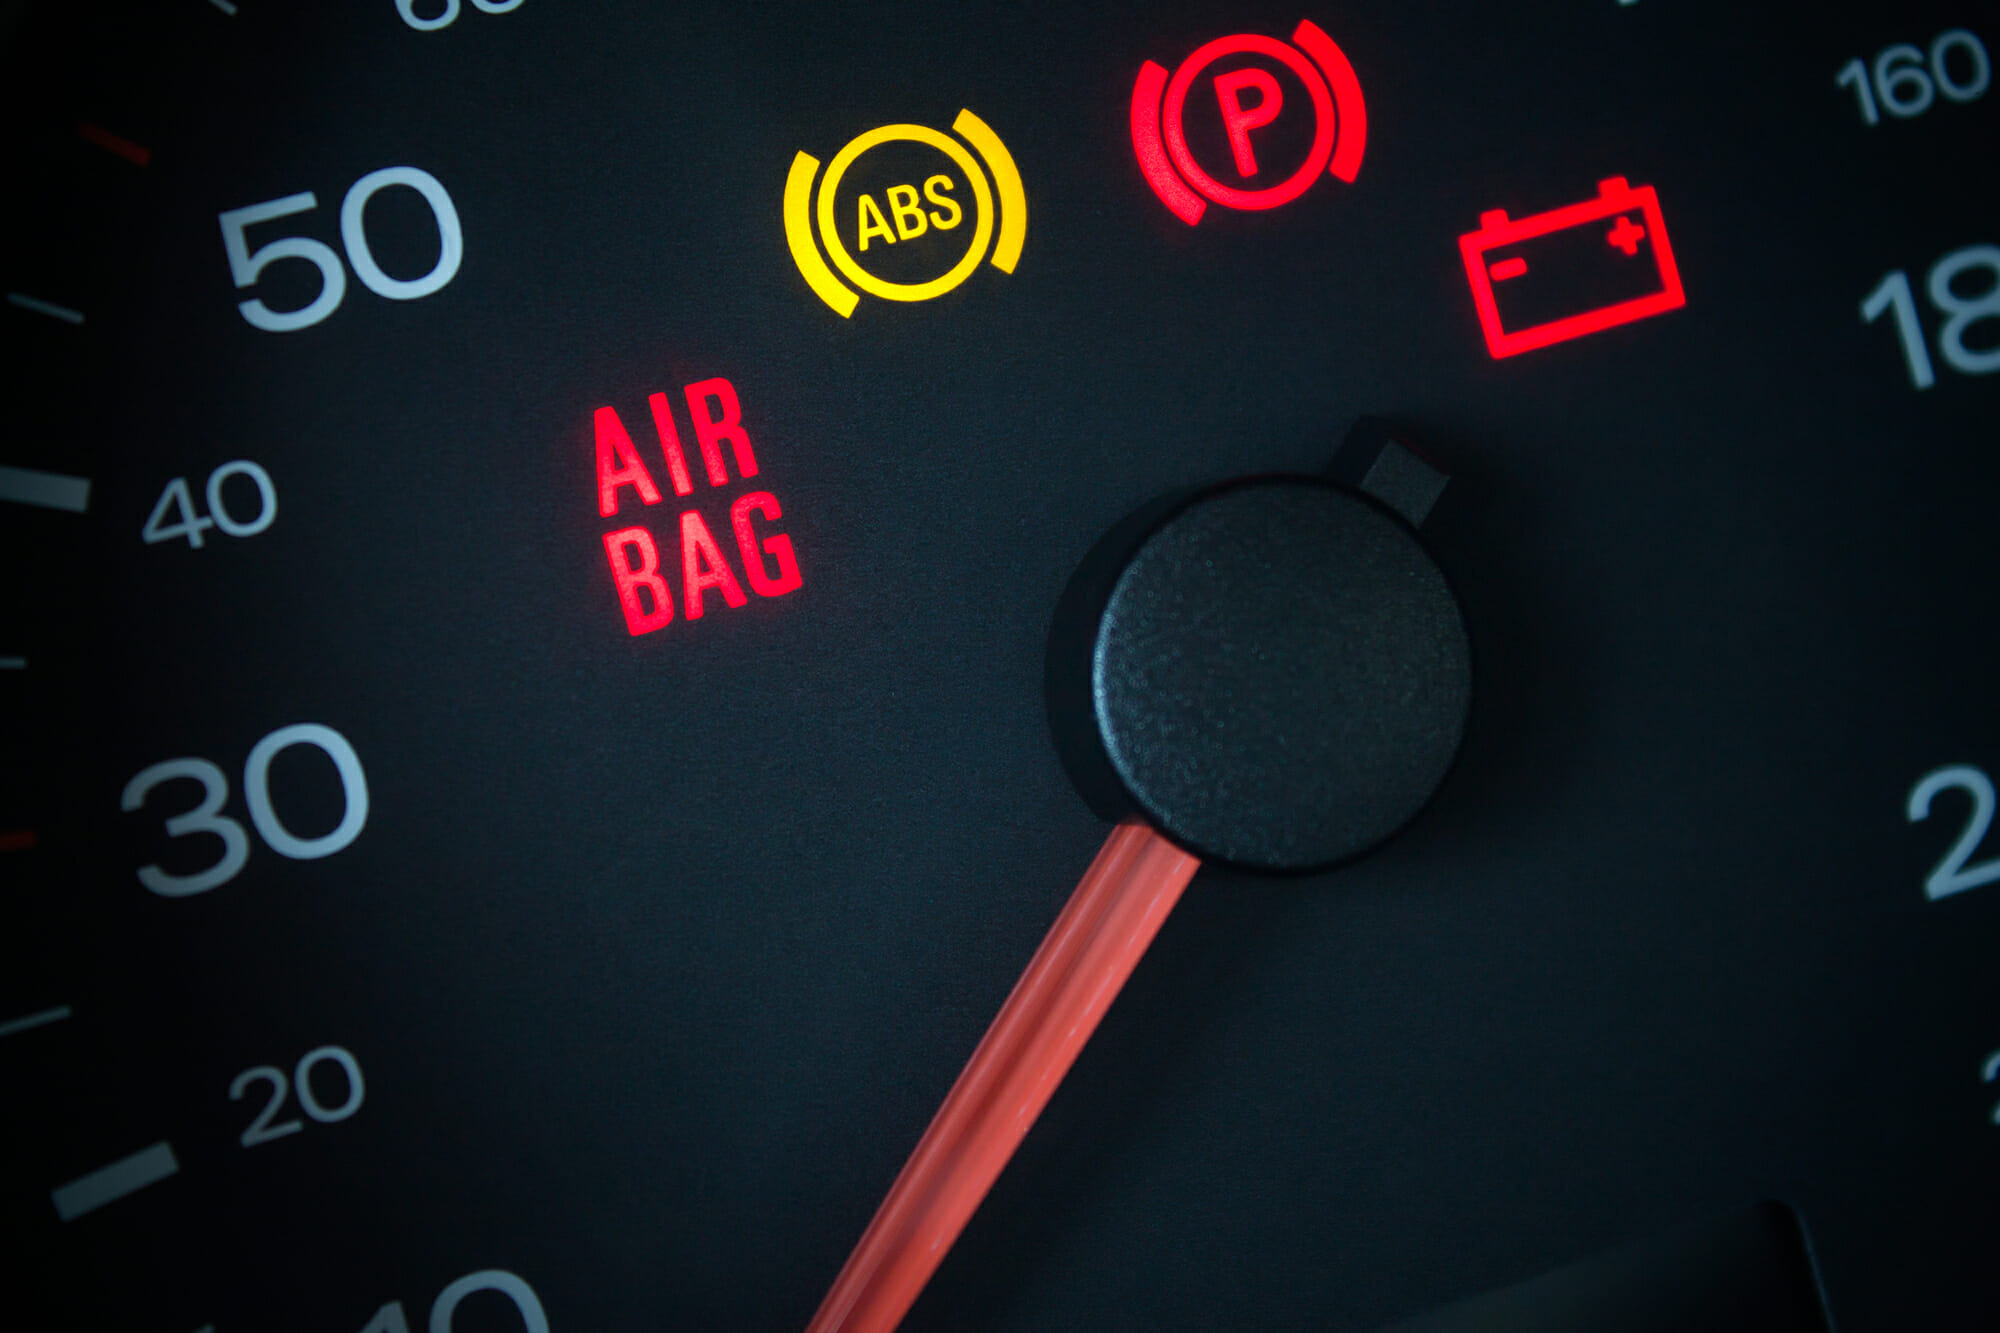 Car Airbag Warning Light On The Dashboard